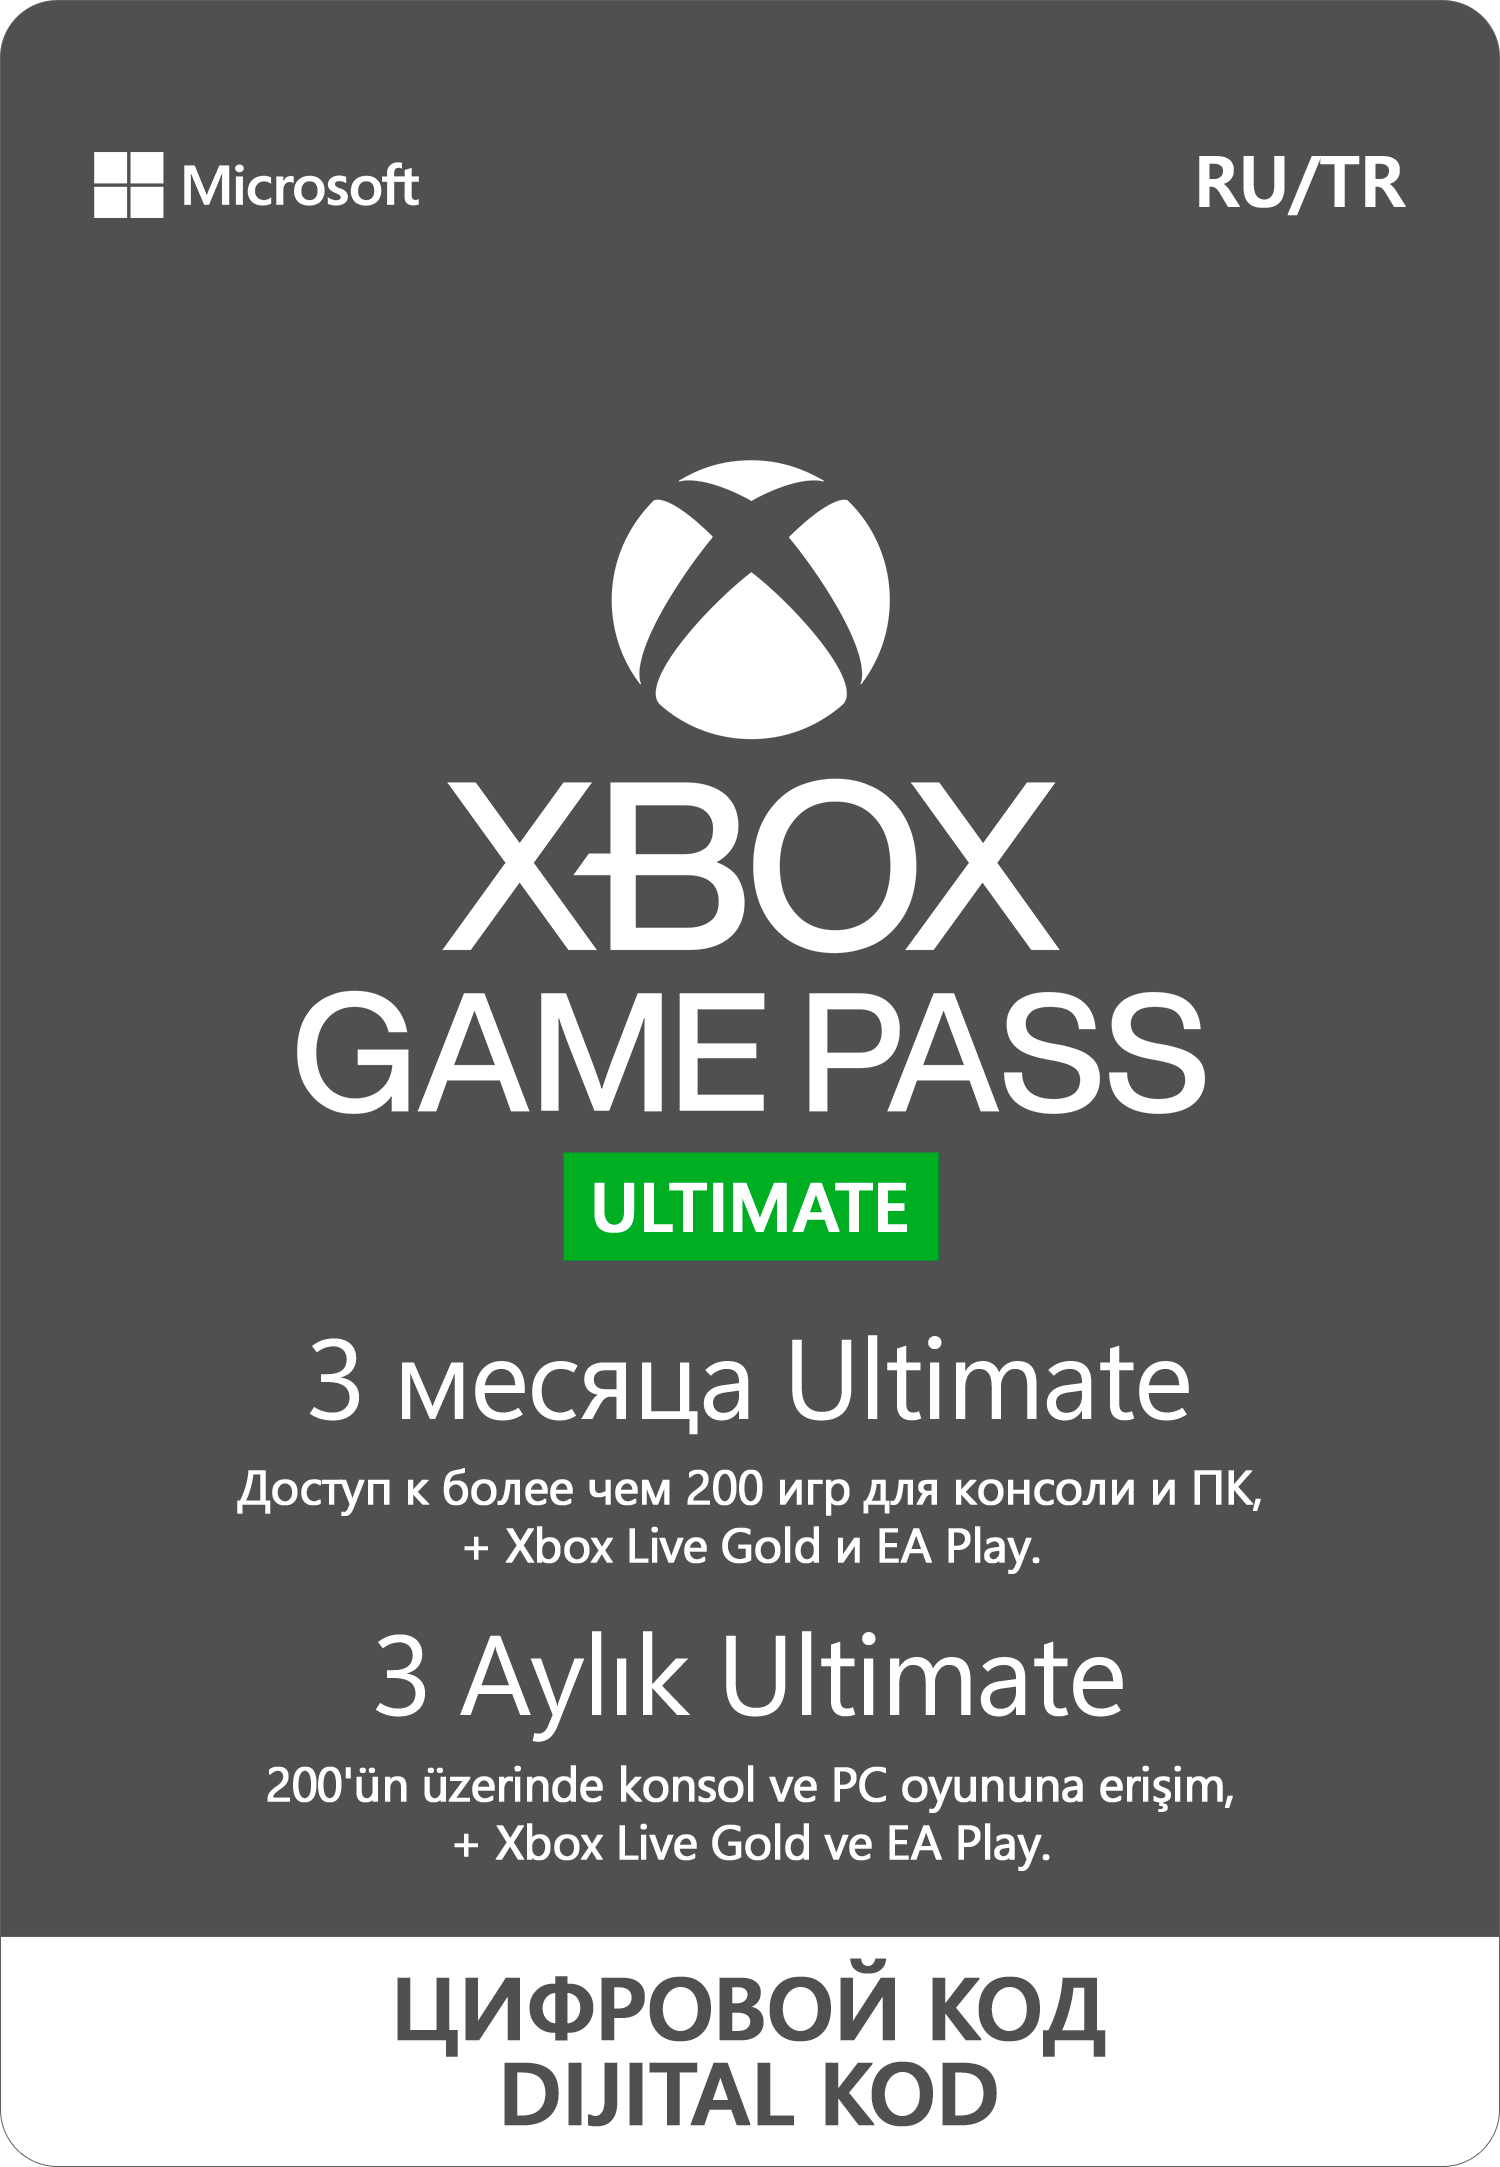 Подписка Xbox Game Pass Ultimate (3 месяца, Россия)